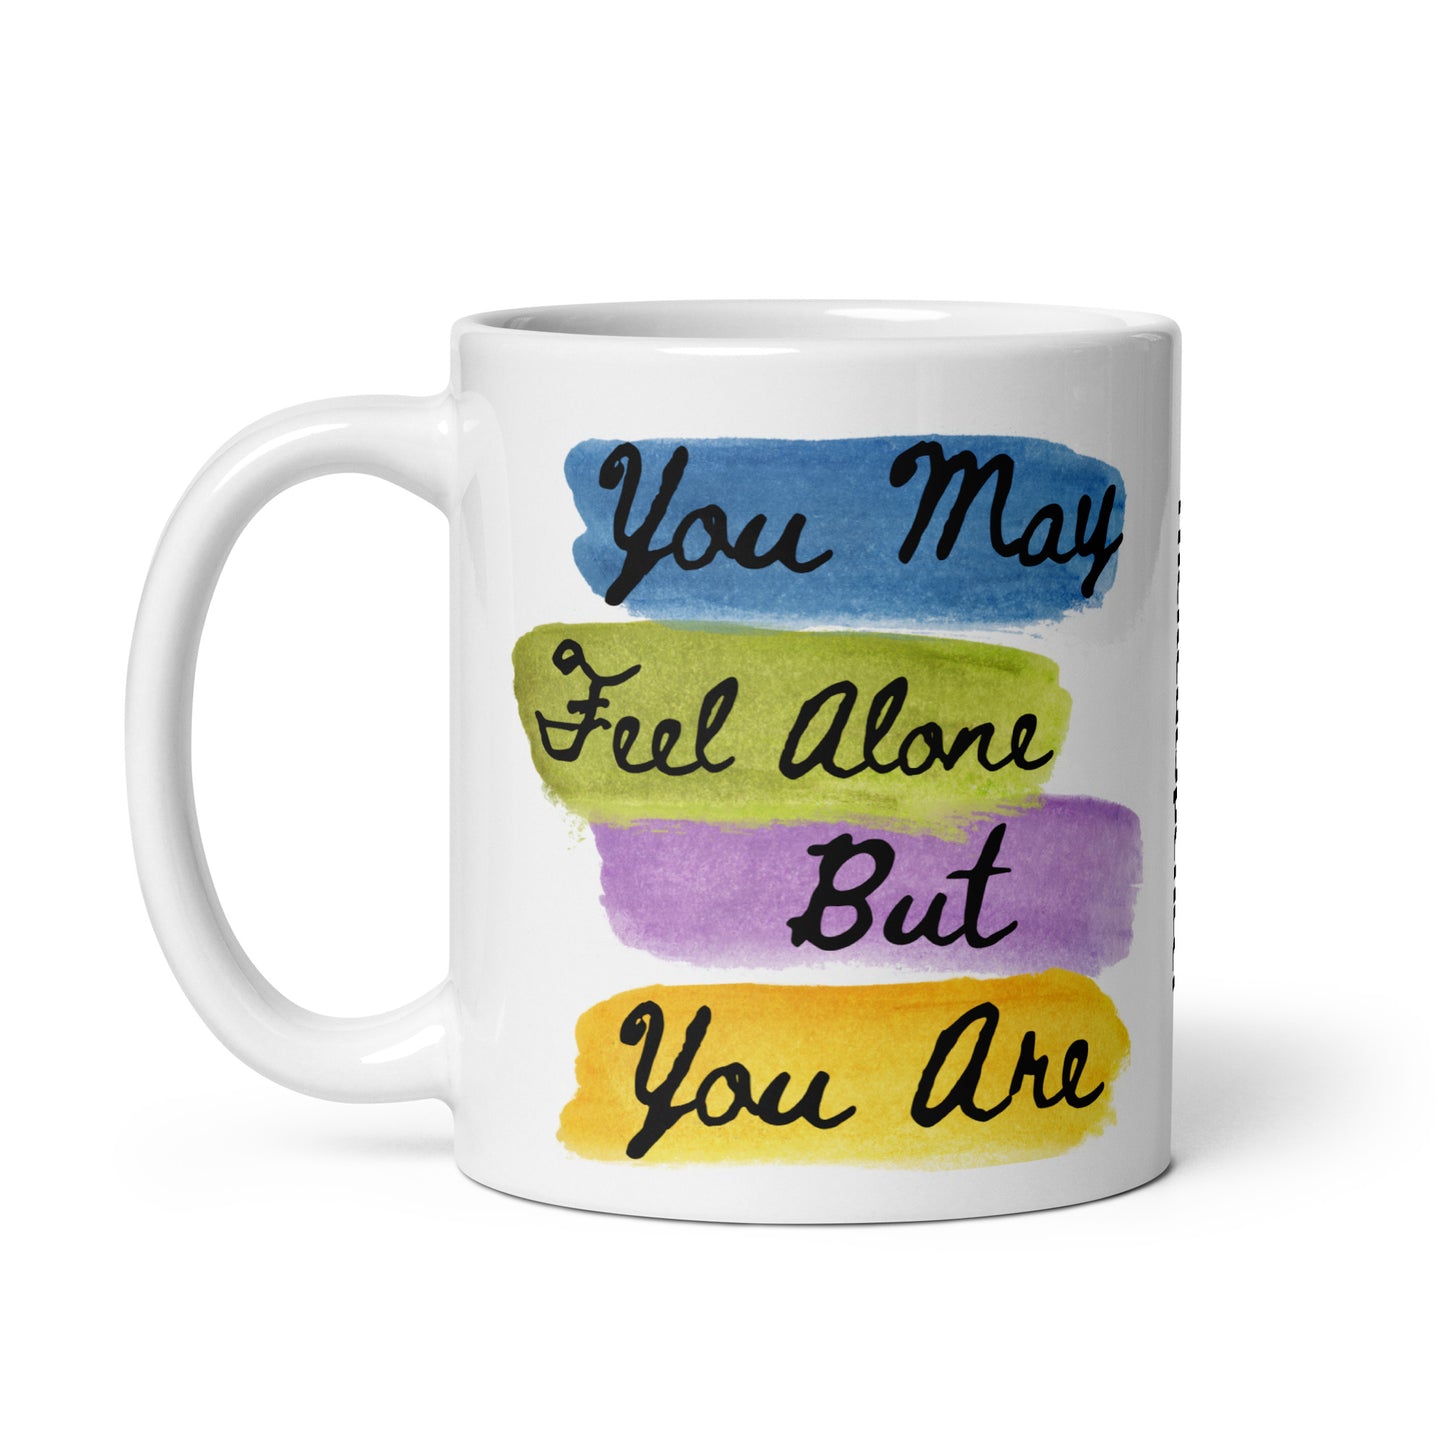 You May Feel Alone Mug